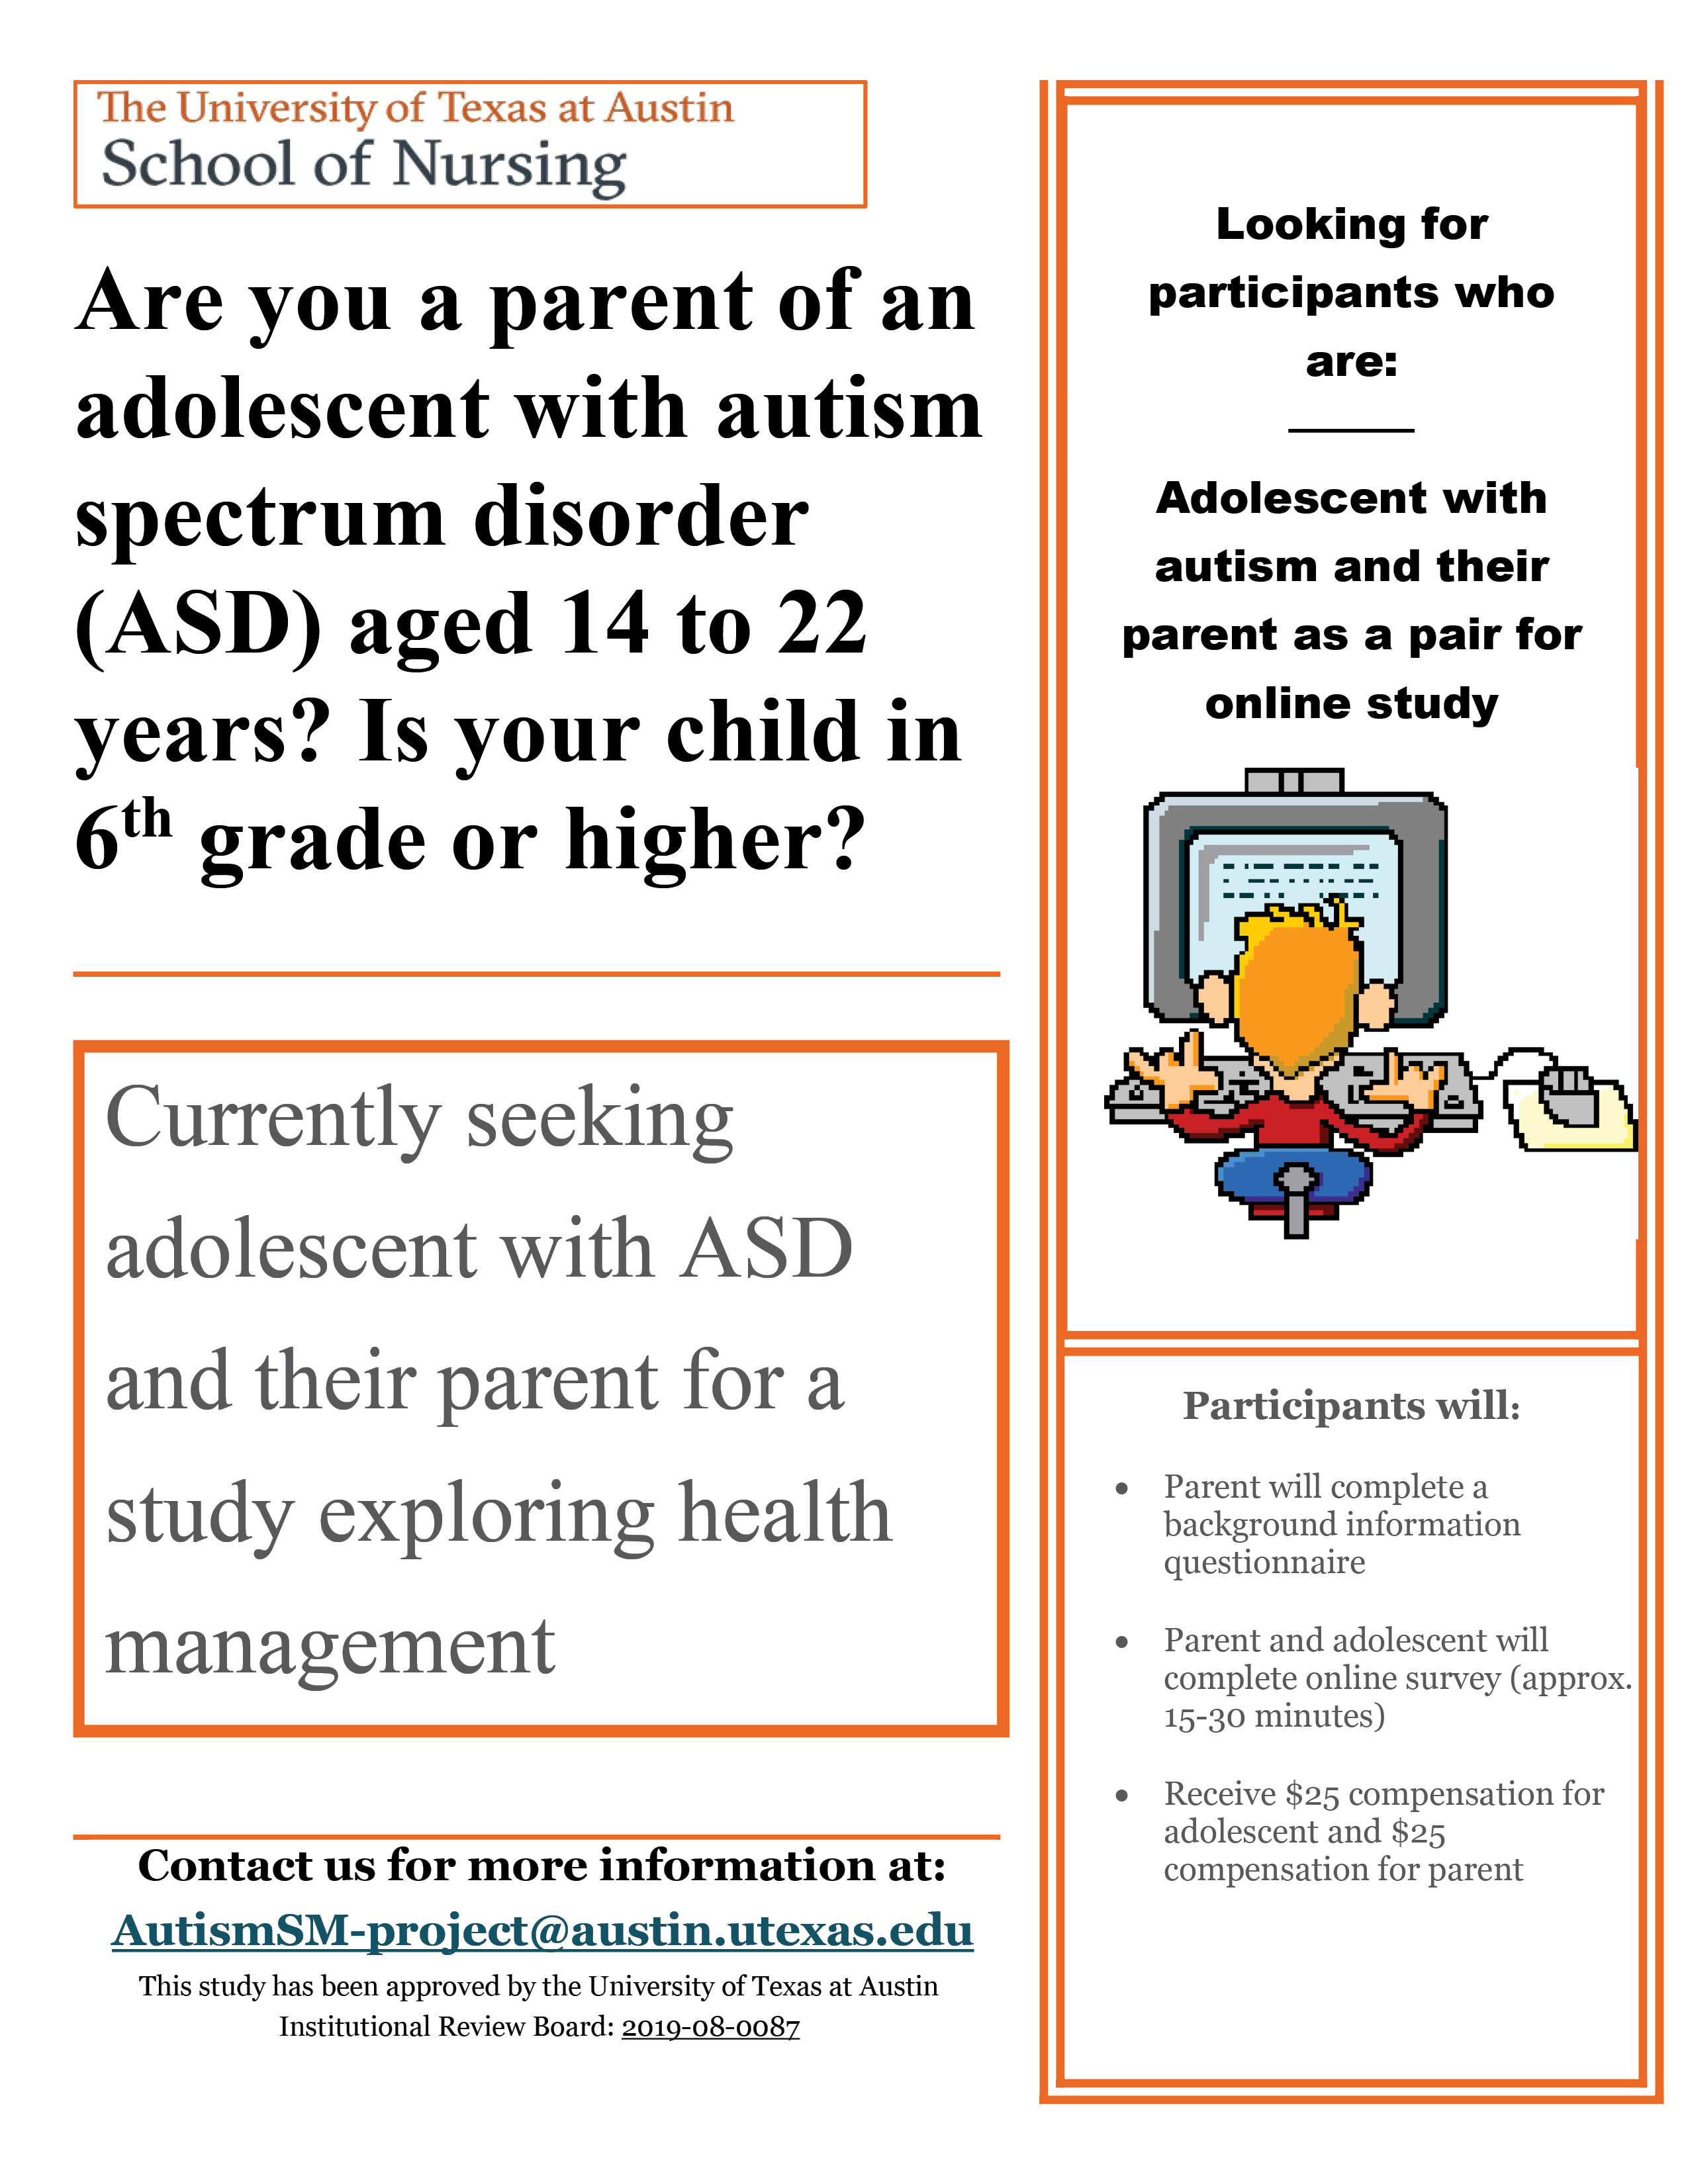 ASD Dissertation Flyer, contact AutismSM-project@austin.utexas.edu for more information